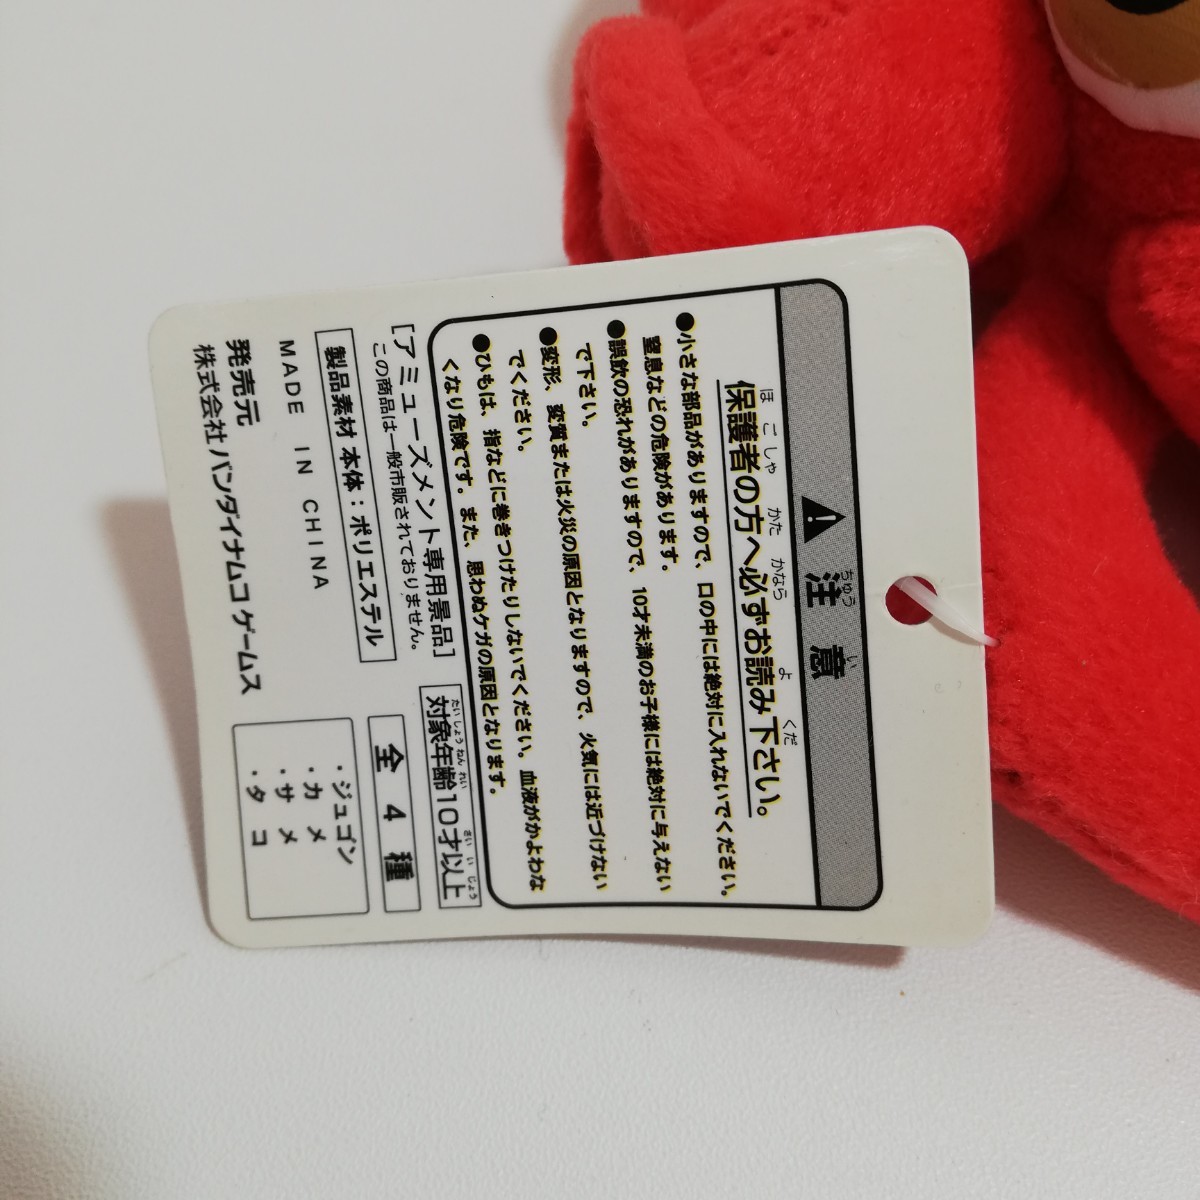 SANKYO slot machine hyper sea monogatari in Carib standard soft toy mascot octopus red 18cm tag attaching [ goods pachinko character ]